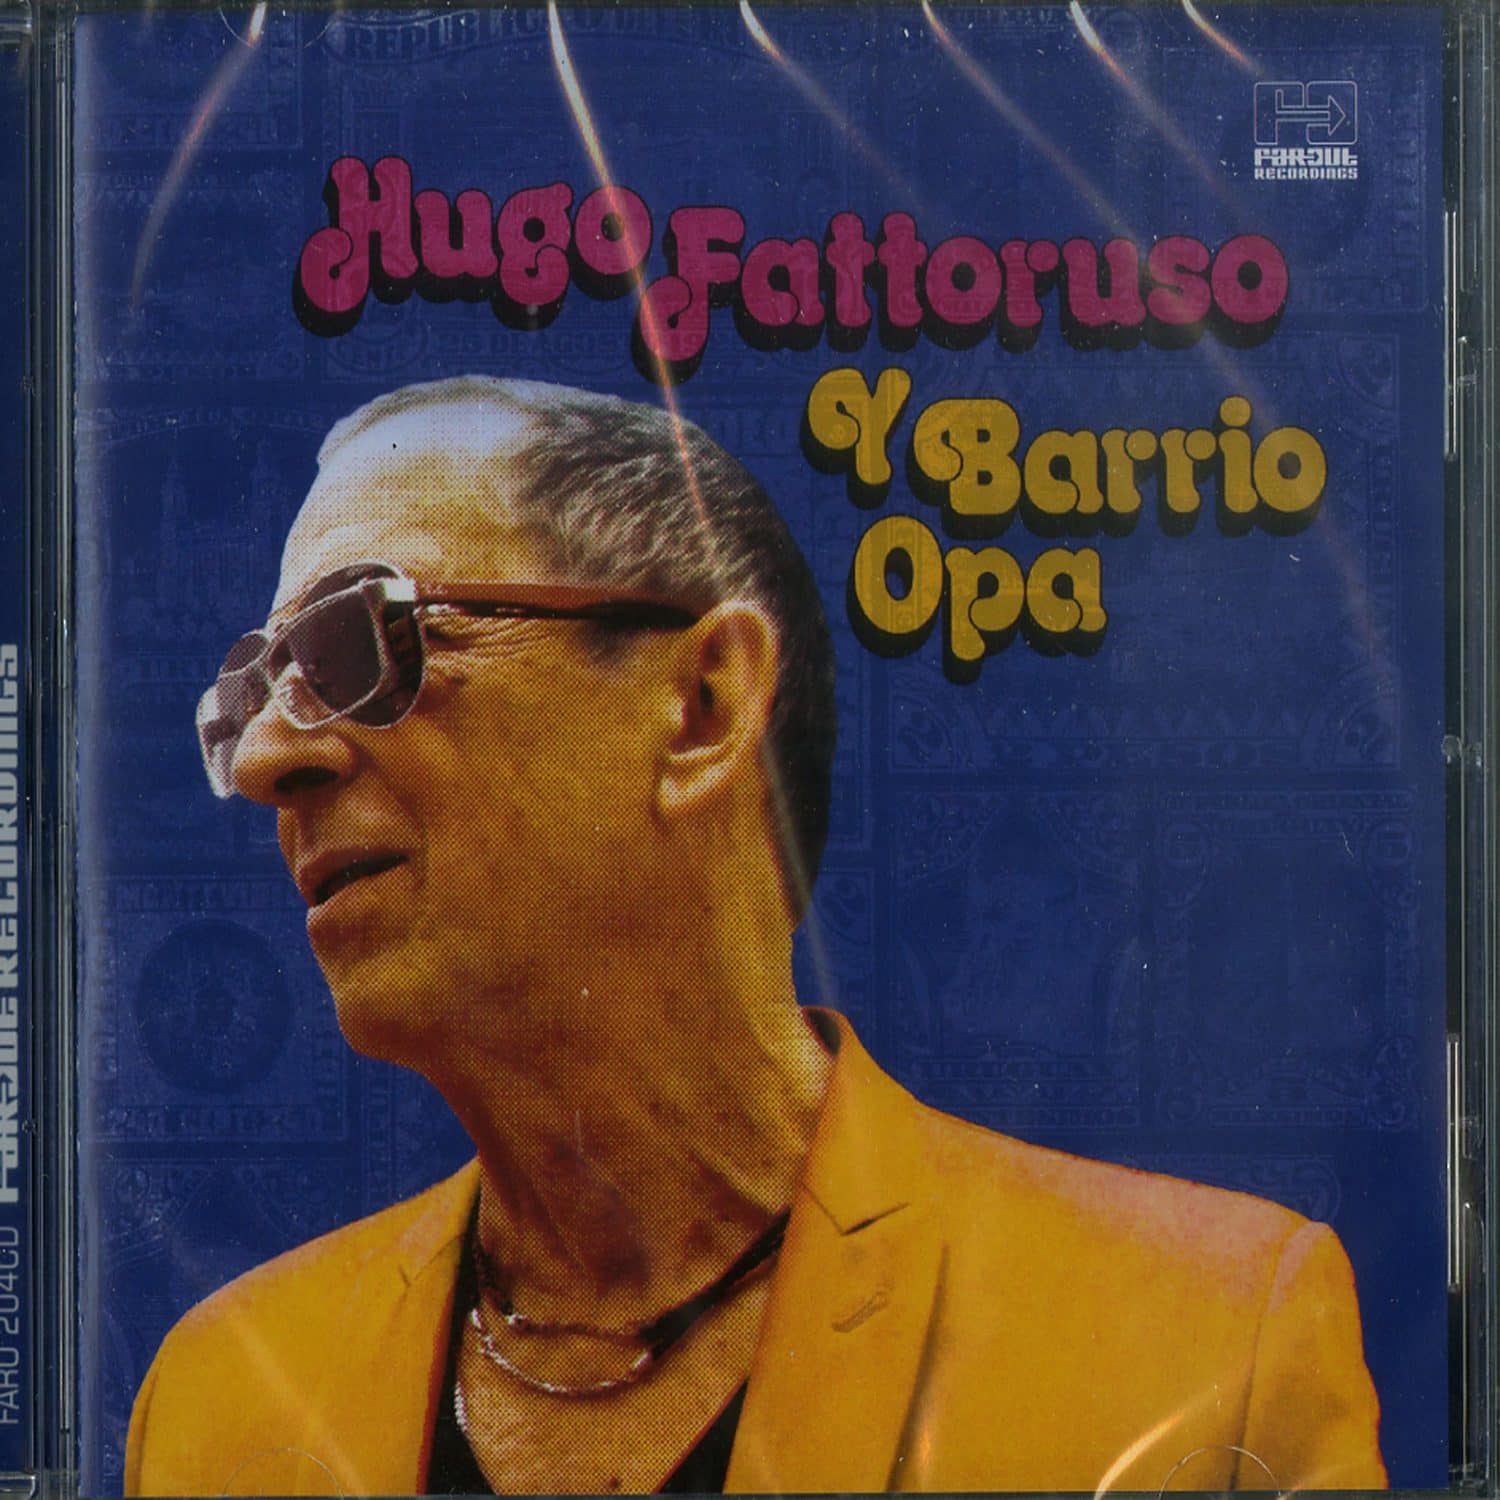 Hugo Fattoruso - HUGO FATTORUSO Y BARRIO OPA 